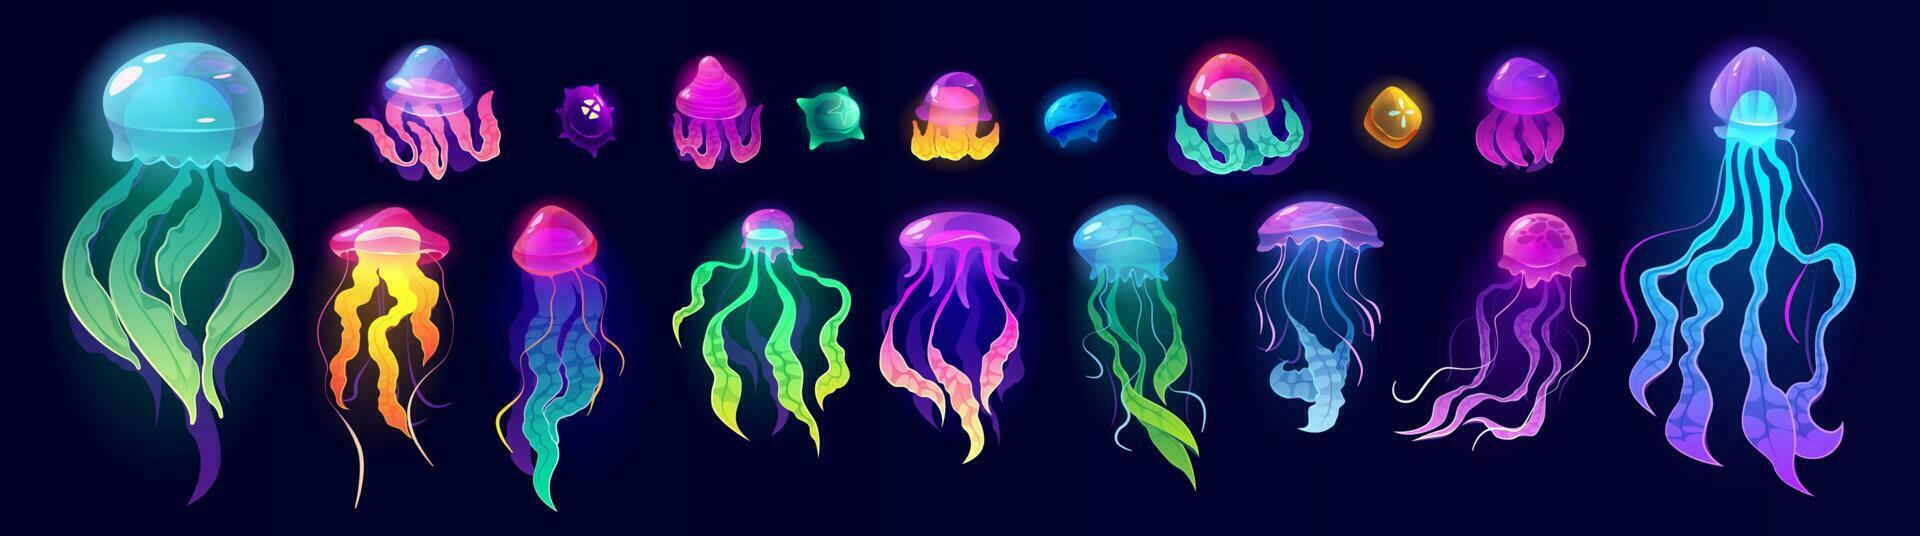 medusas animales submarinos, medusas de colores vector